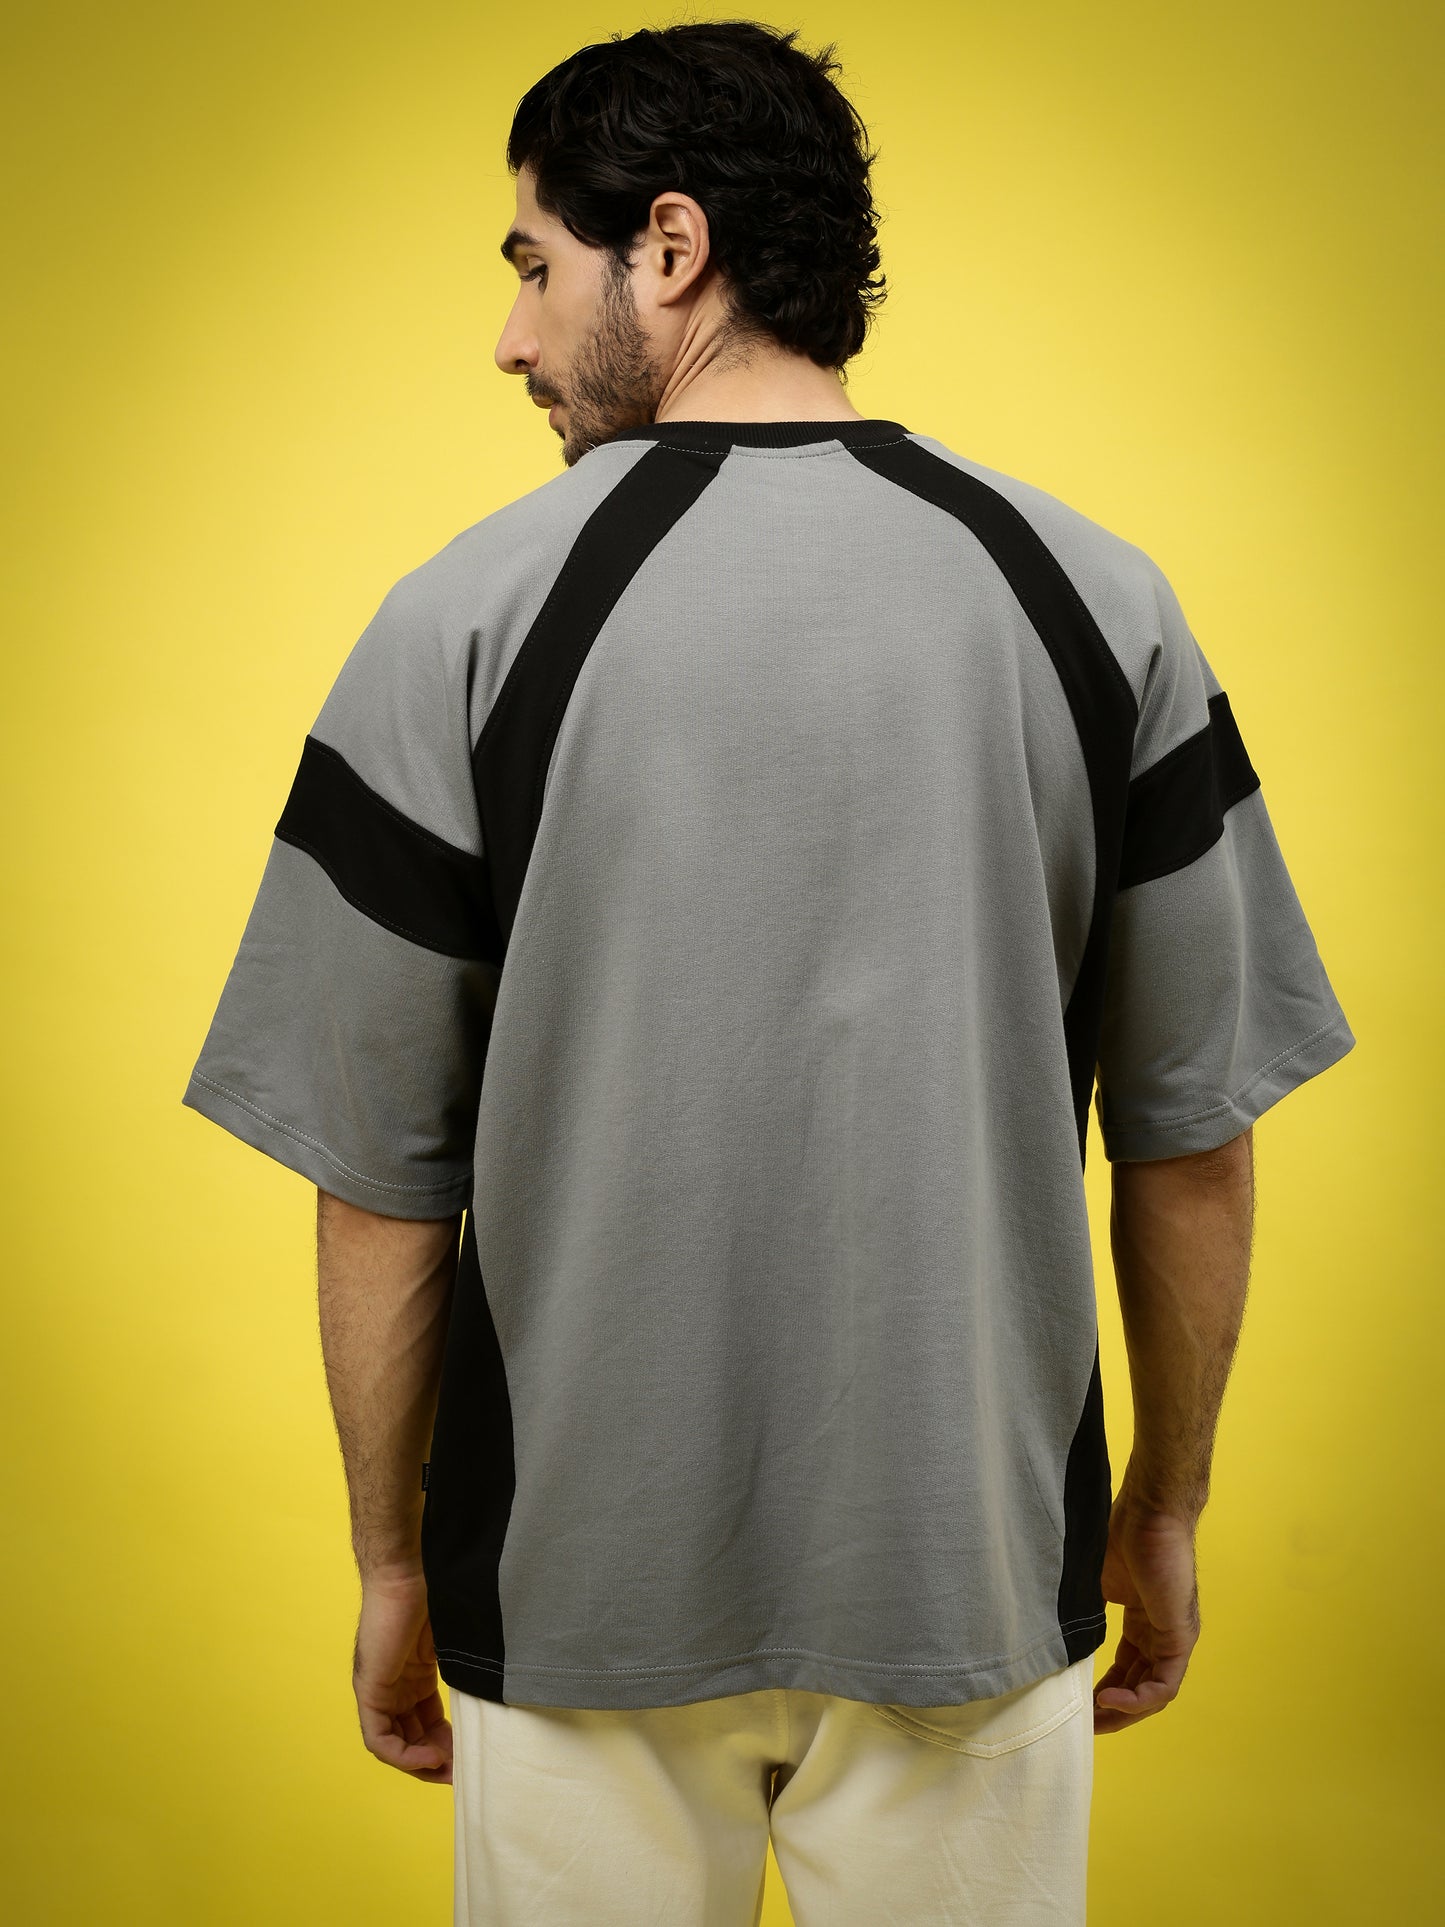 Turbo Over-Sized T-Shirt (Slate Grey)